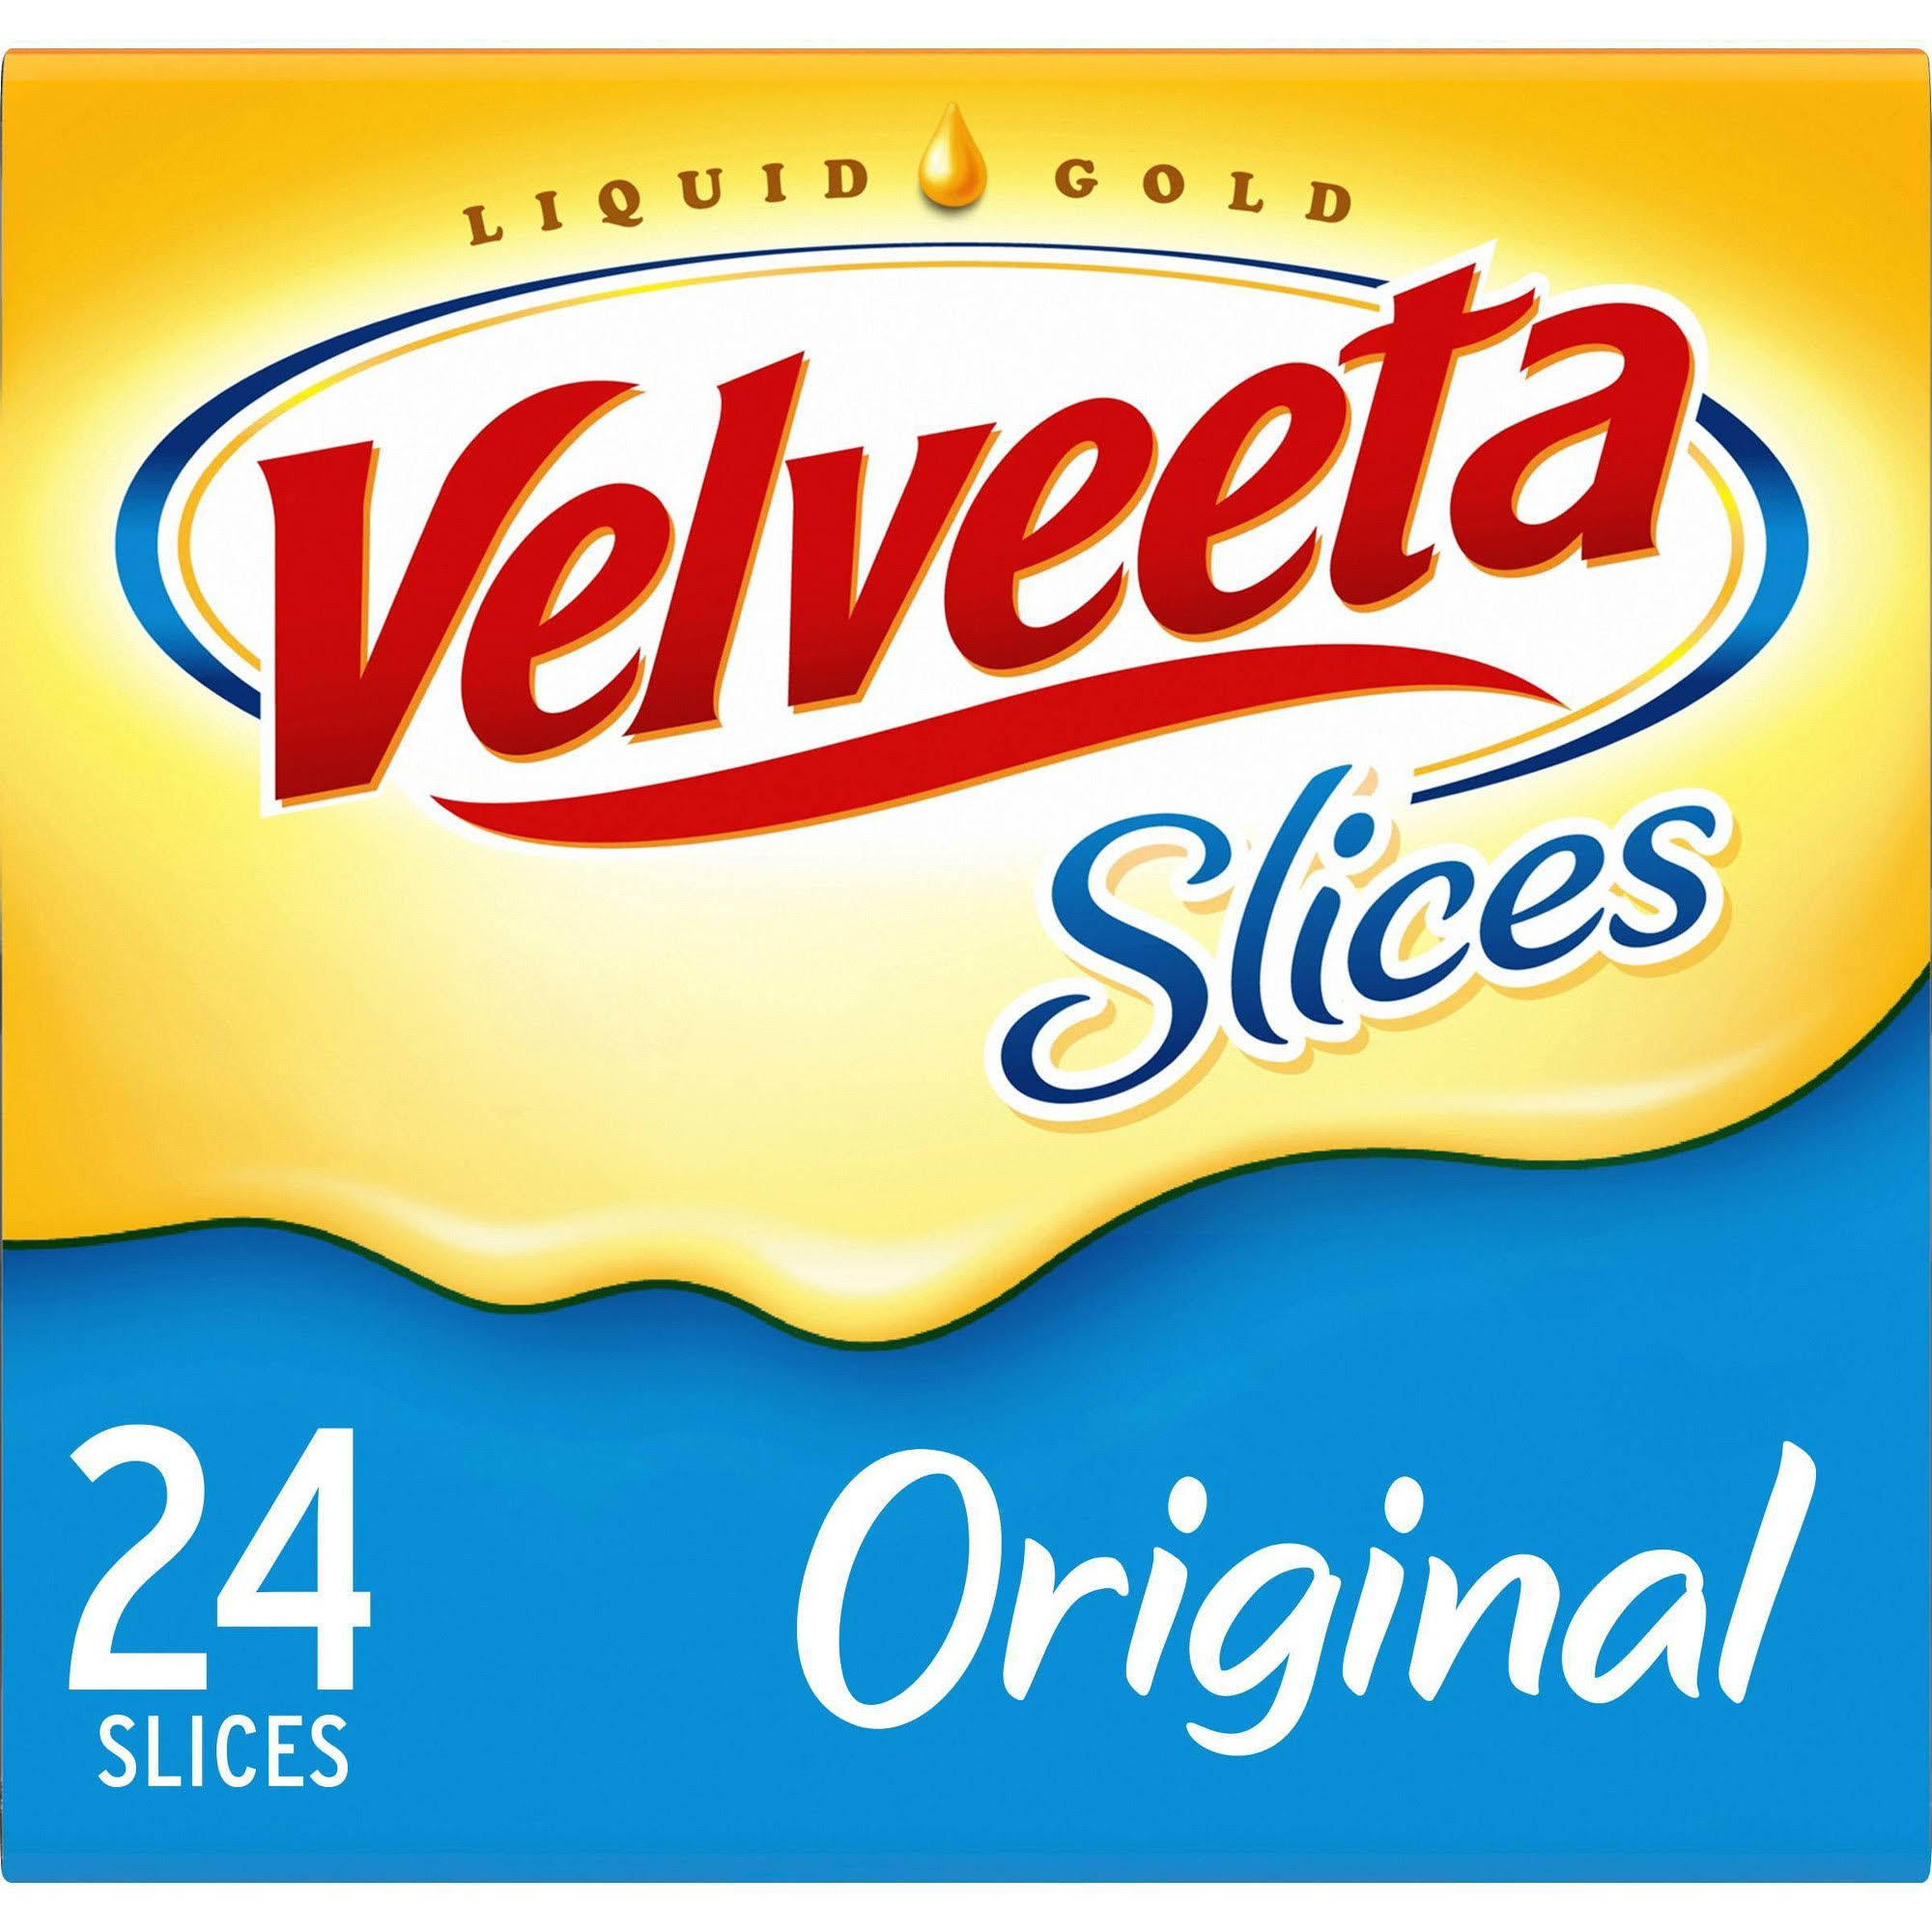 Velveeta Slices Cheese - 24 Slices, 453g, Original Flavor